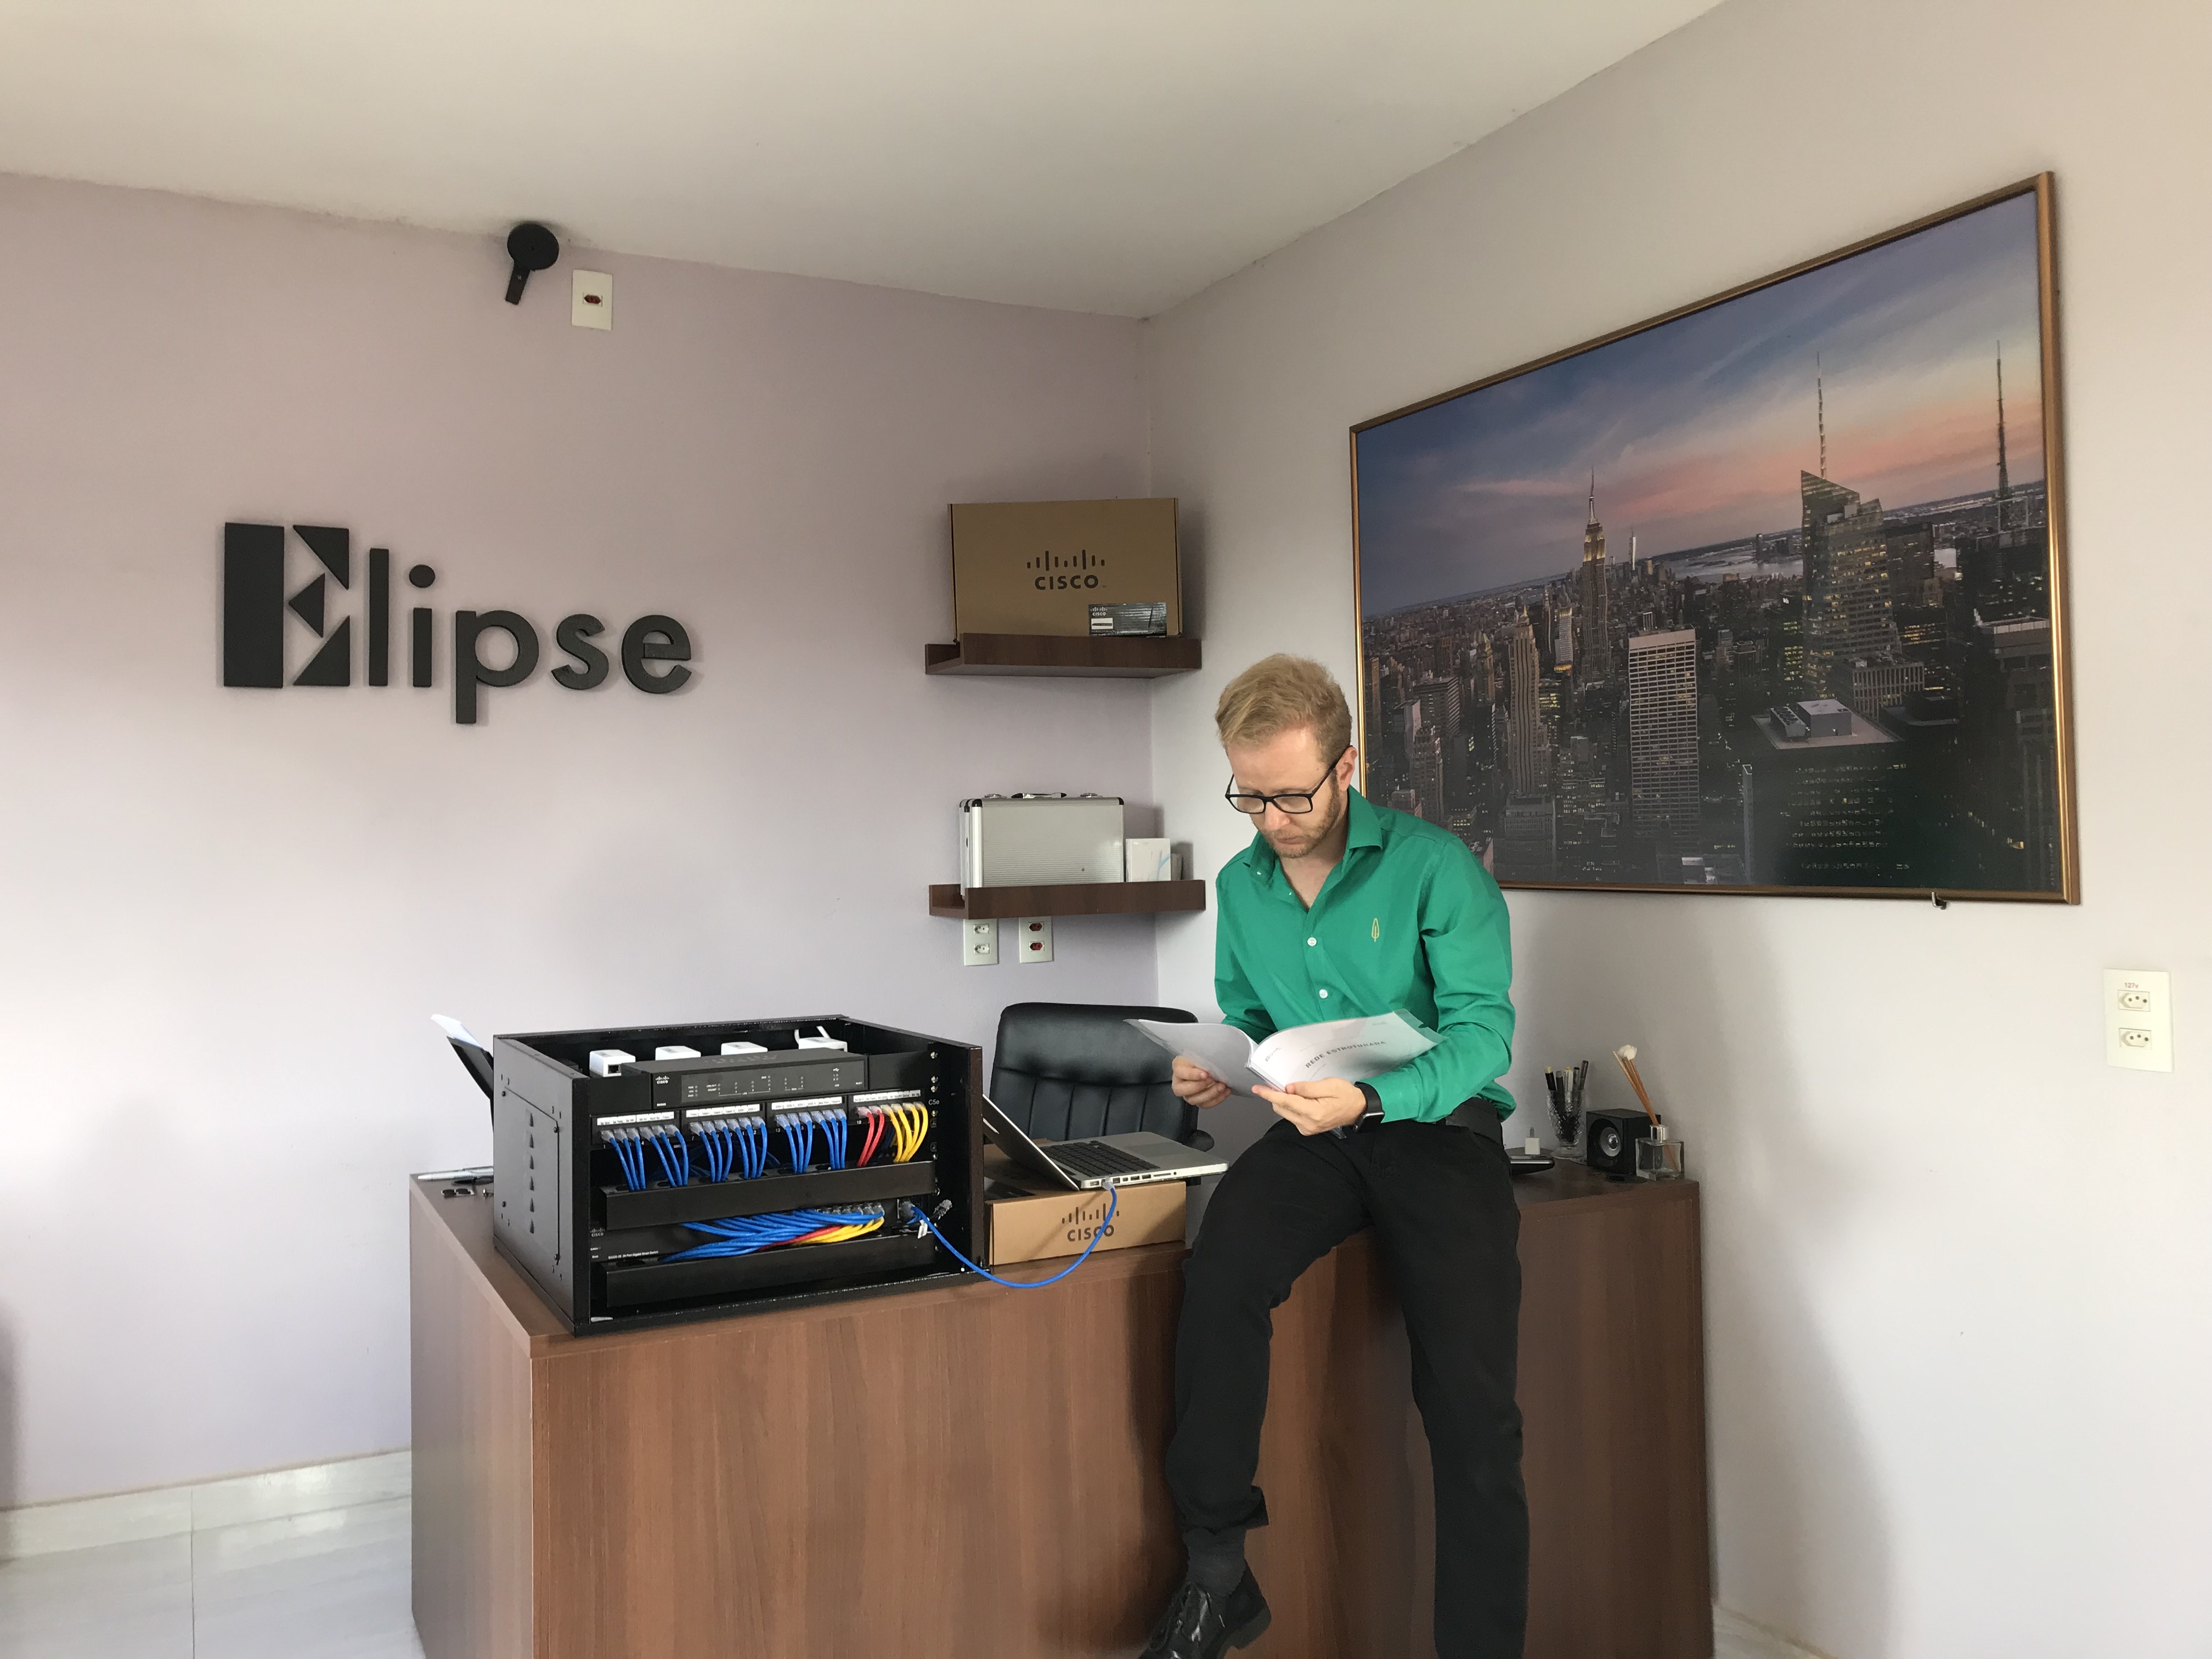 Elipse: a Cisco Small Business Partner Case Study